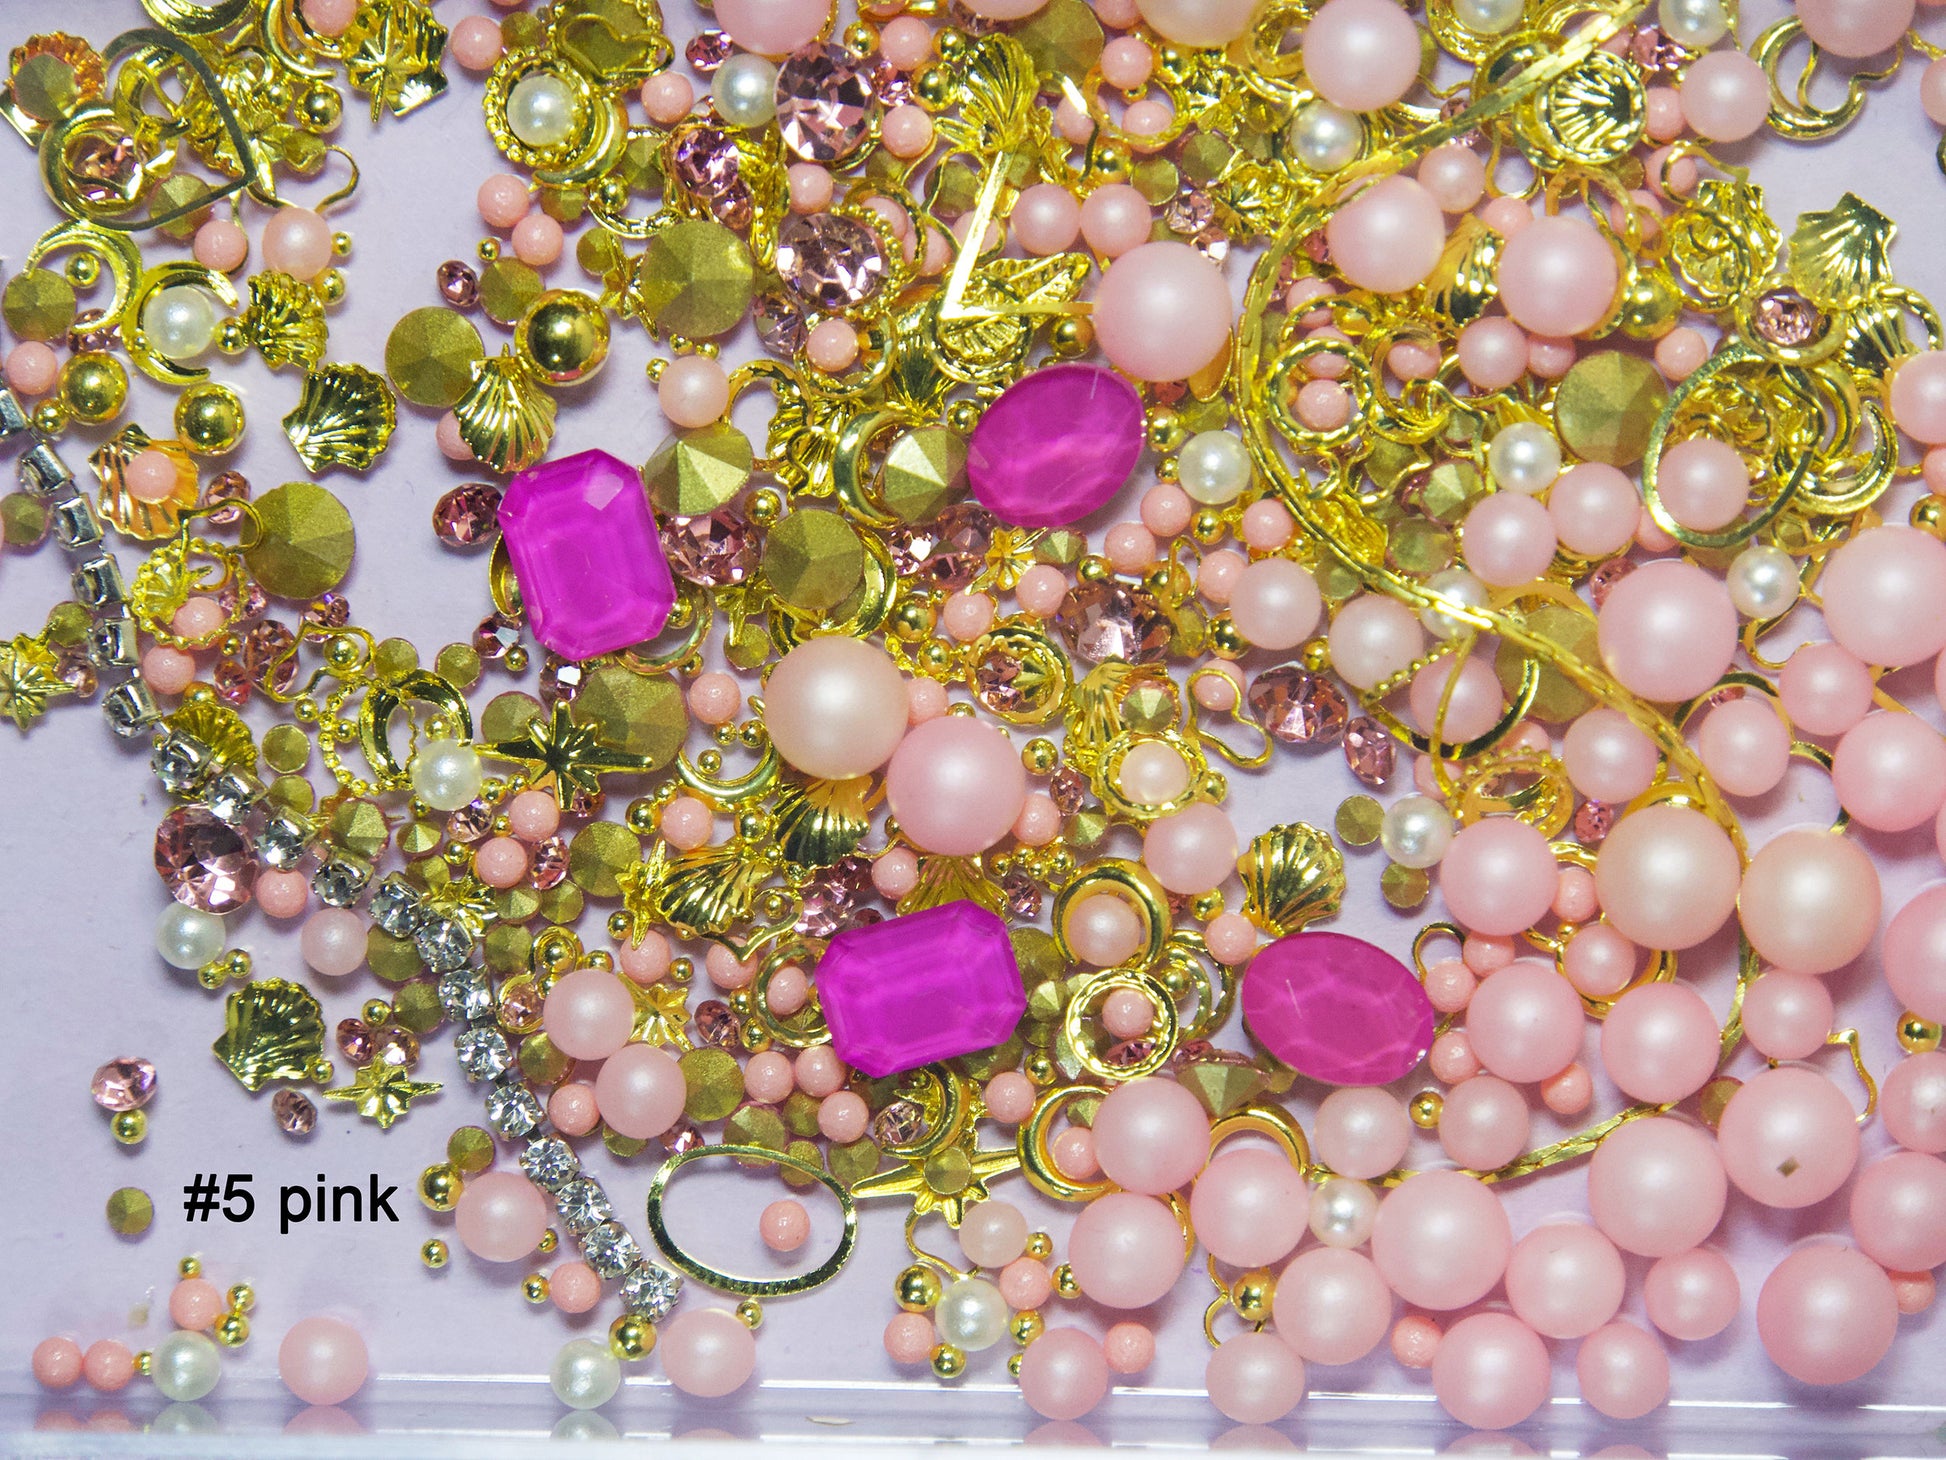 Mixed Pearls Opal Crystals decal/ Mocha Luminous Rhinestones studs 3D Gemstones Resin crafts&nails